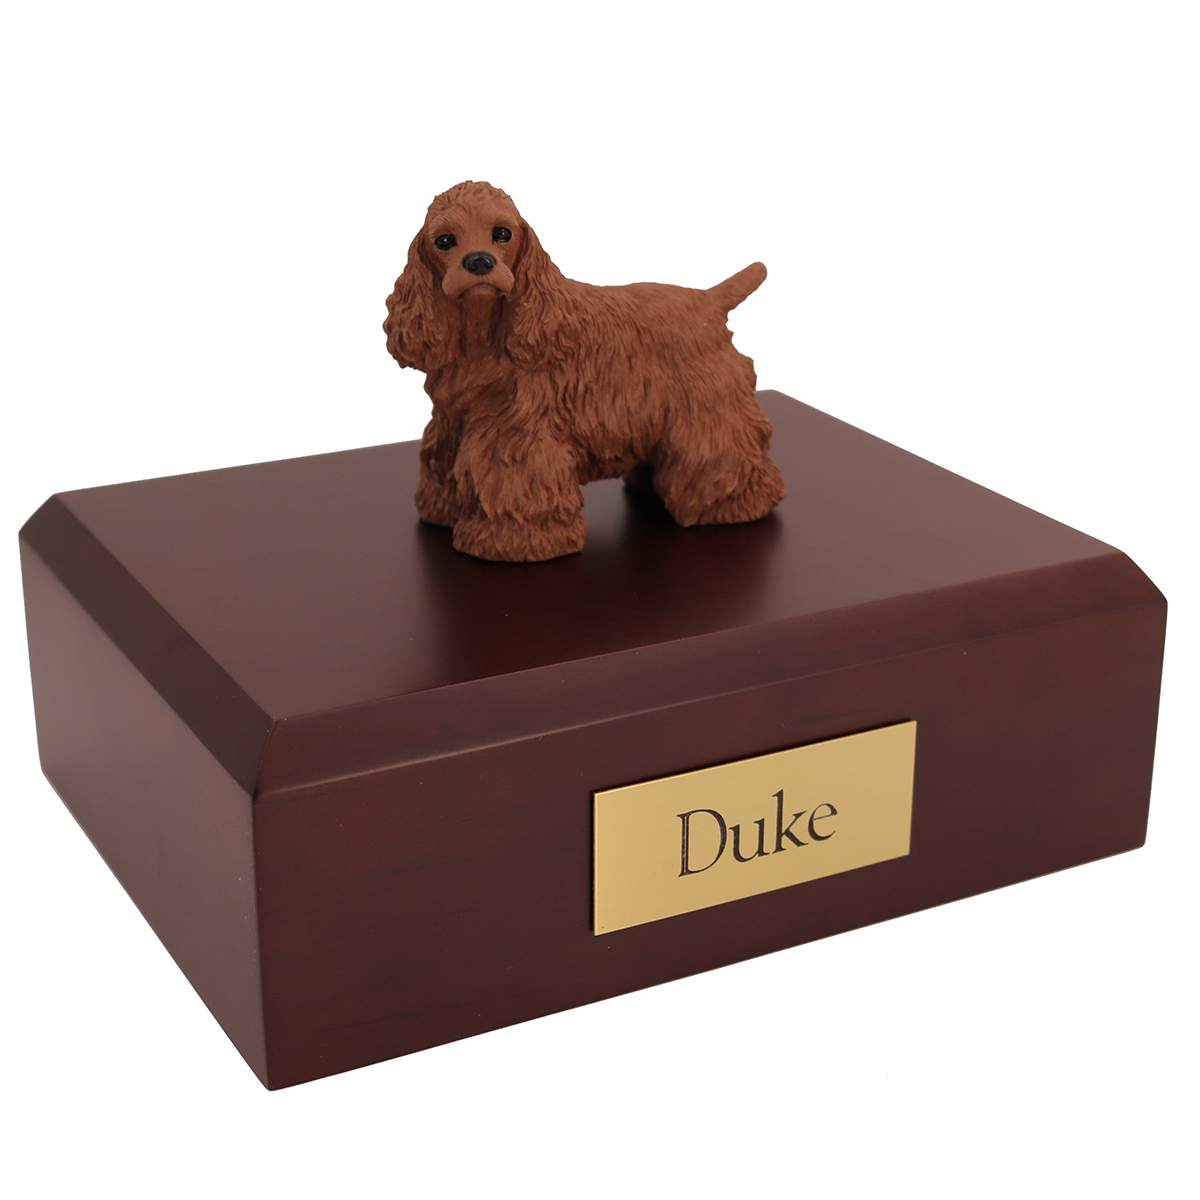 Dog, Cocker, Brown - Figurine Urn